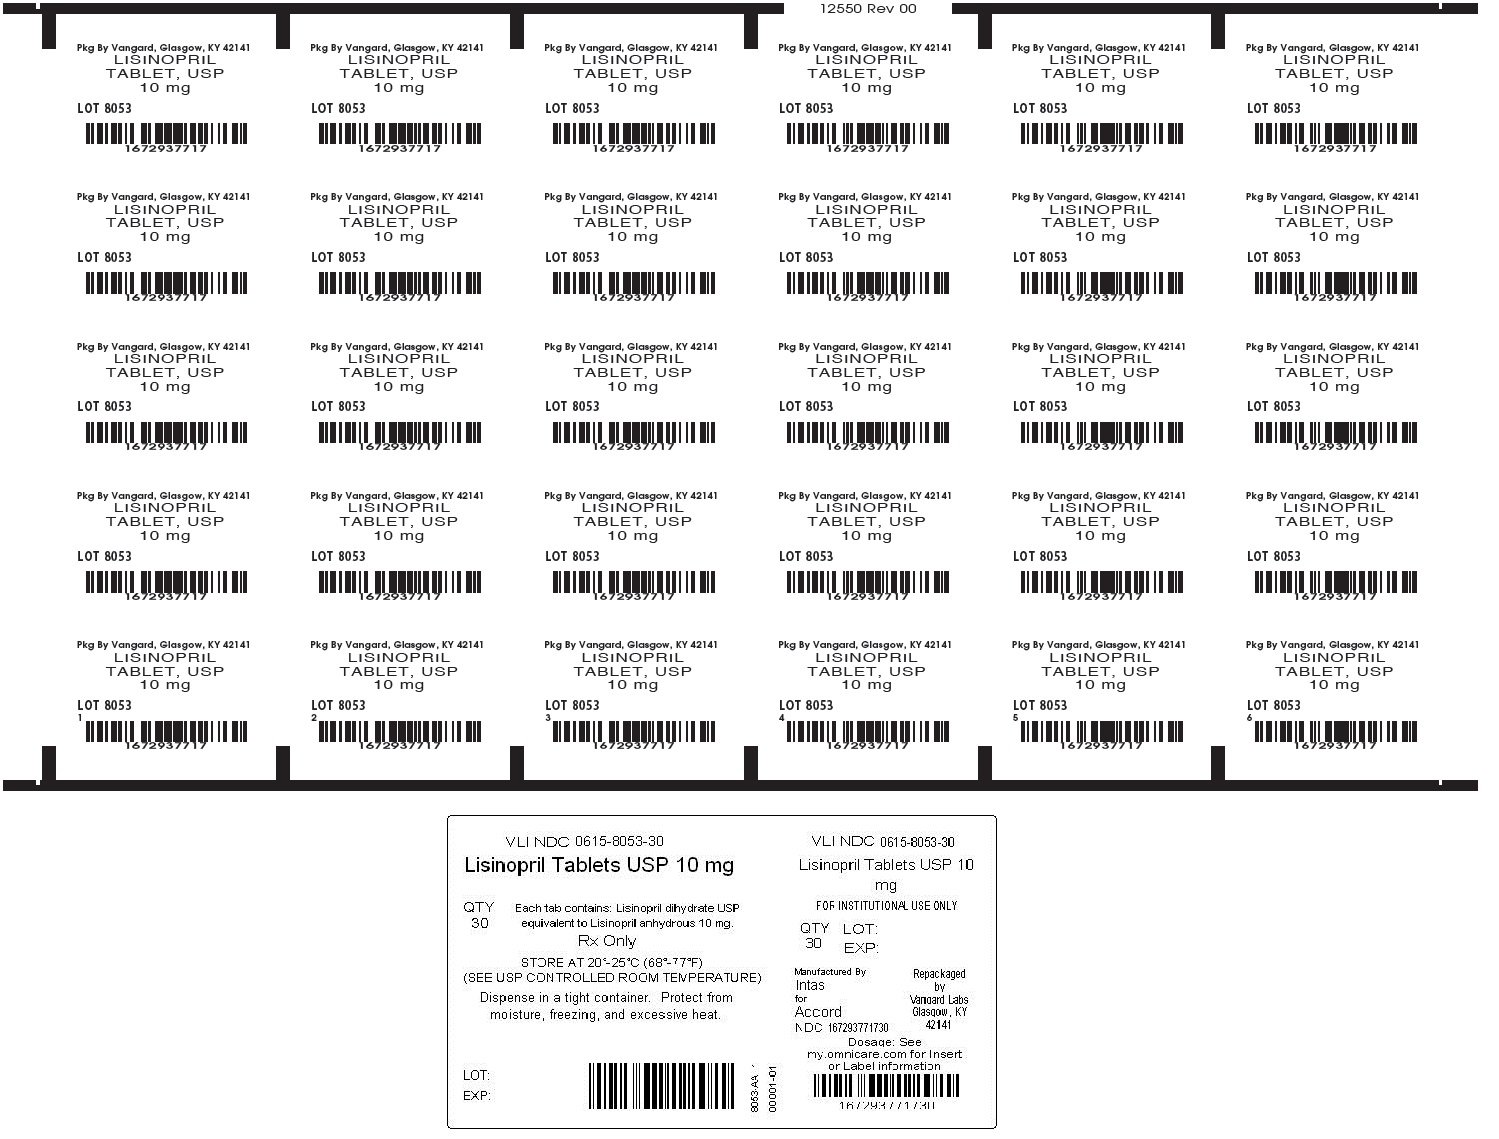 Lisinopril 10mg unit dose label